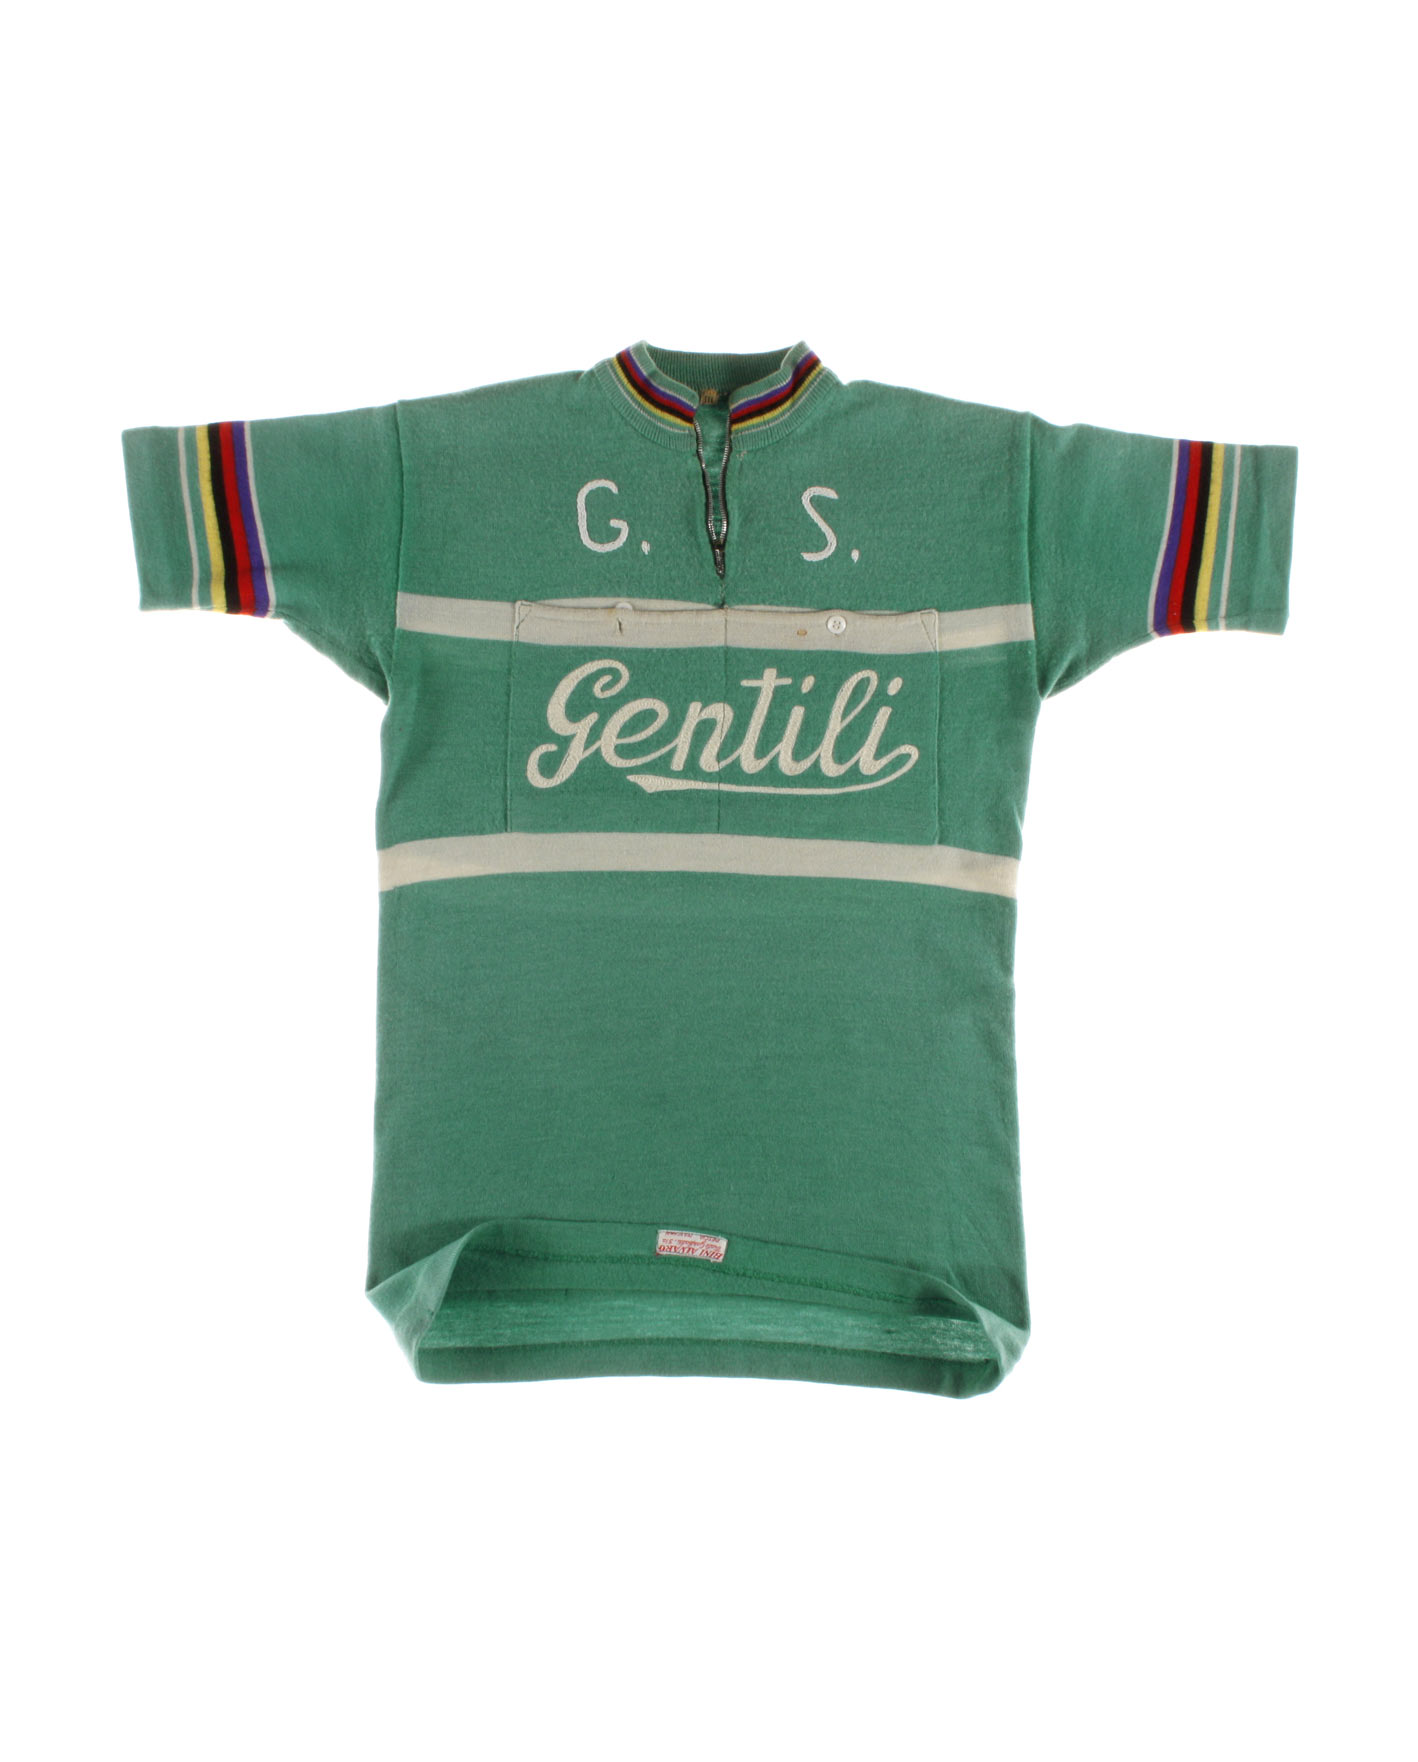 Italy. G.S. Gentili Cycling wool Rare t-shirt 50s